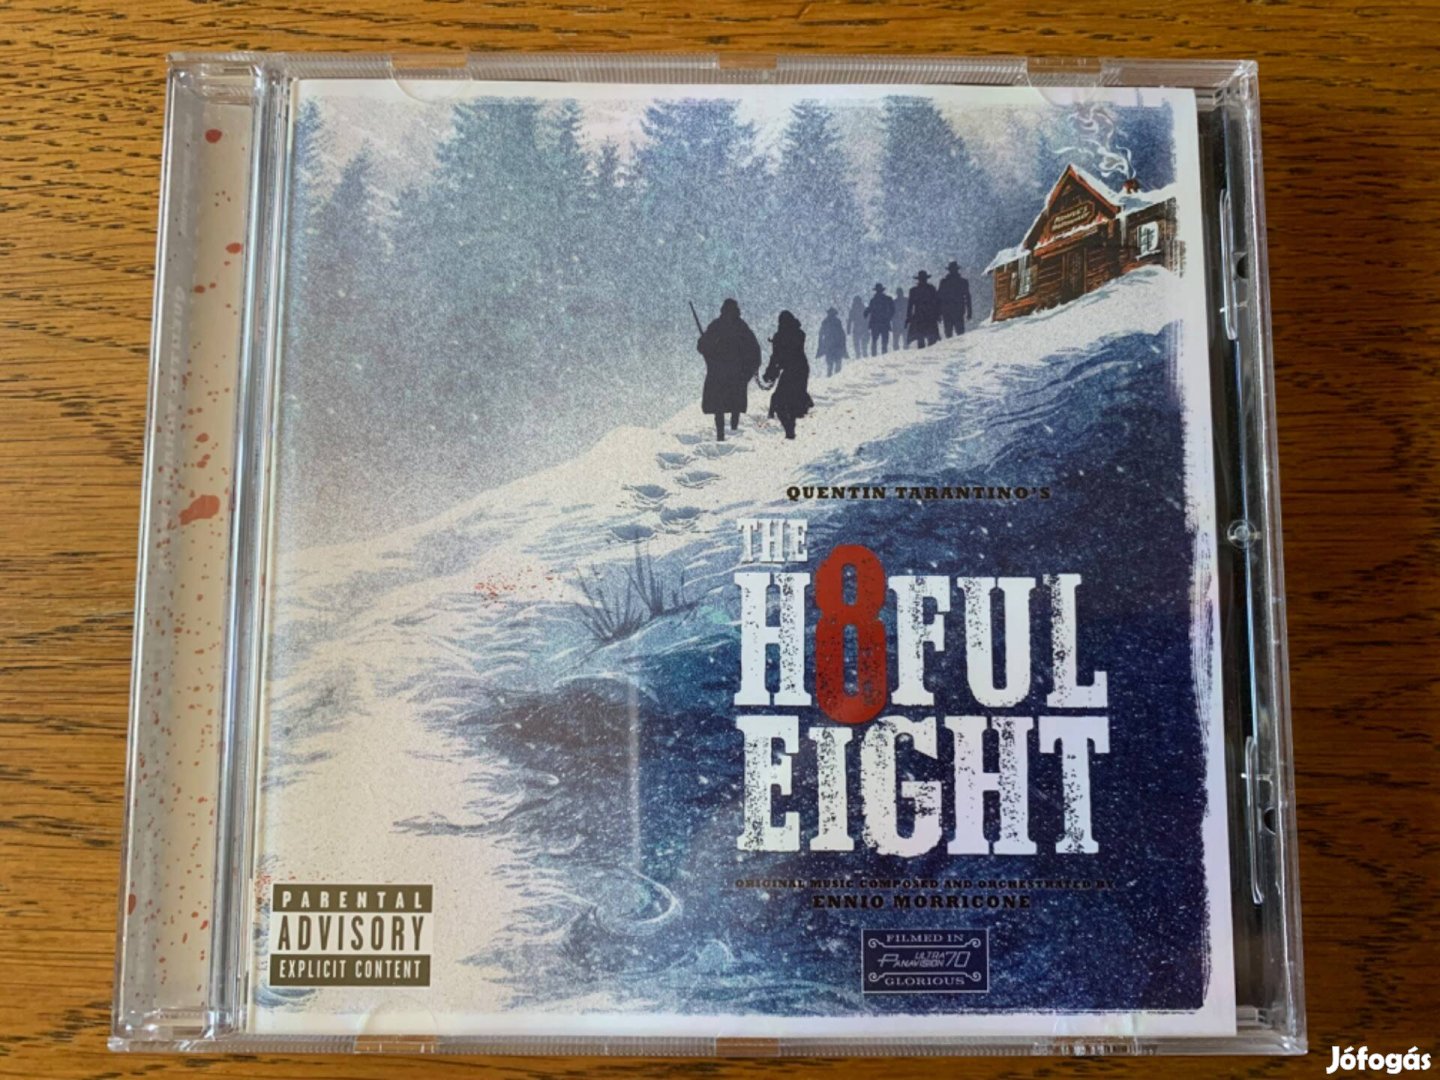 Hateful eight - Aljas nyolcas filmzene cd